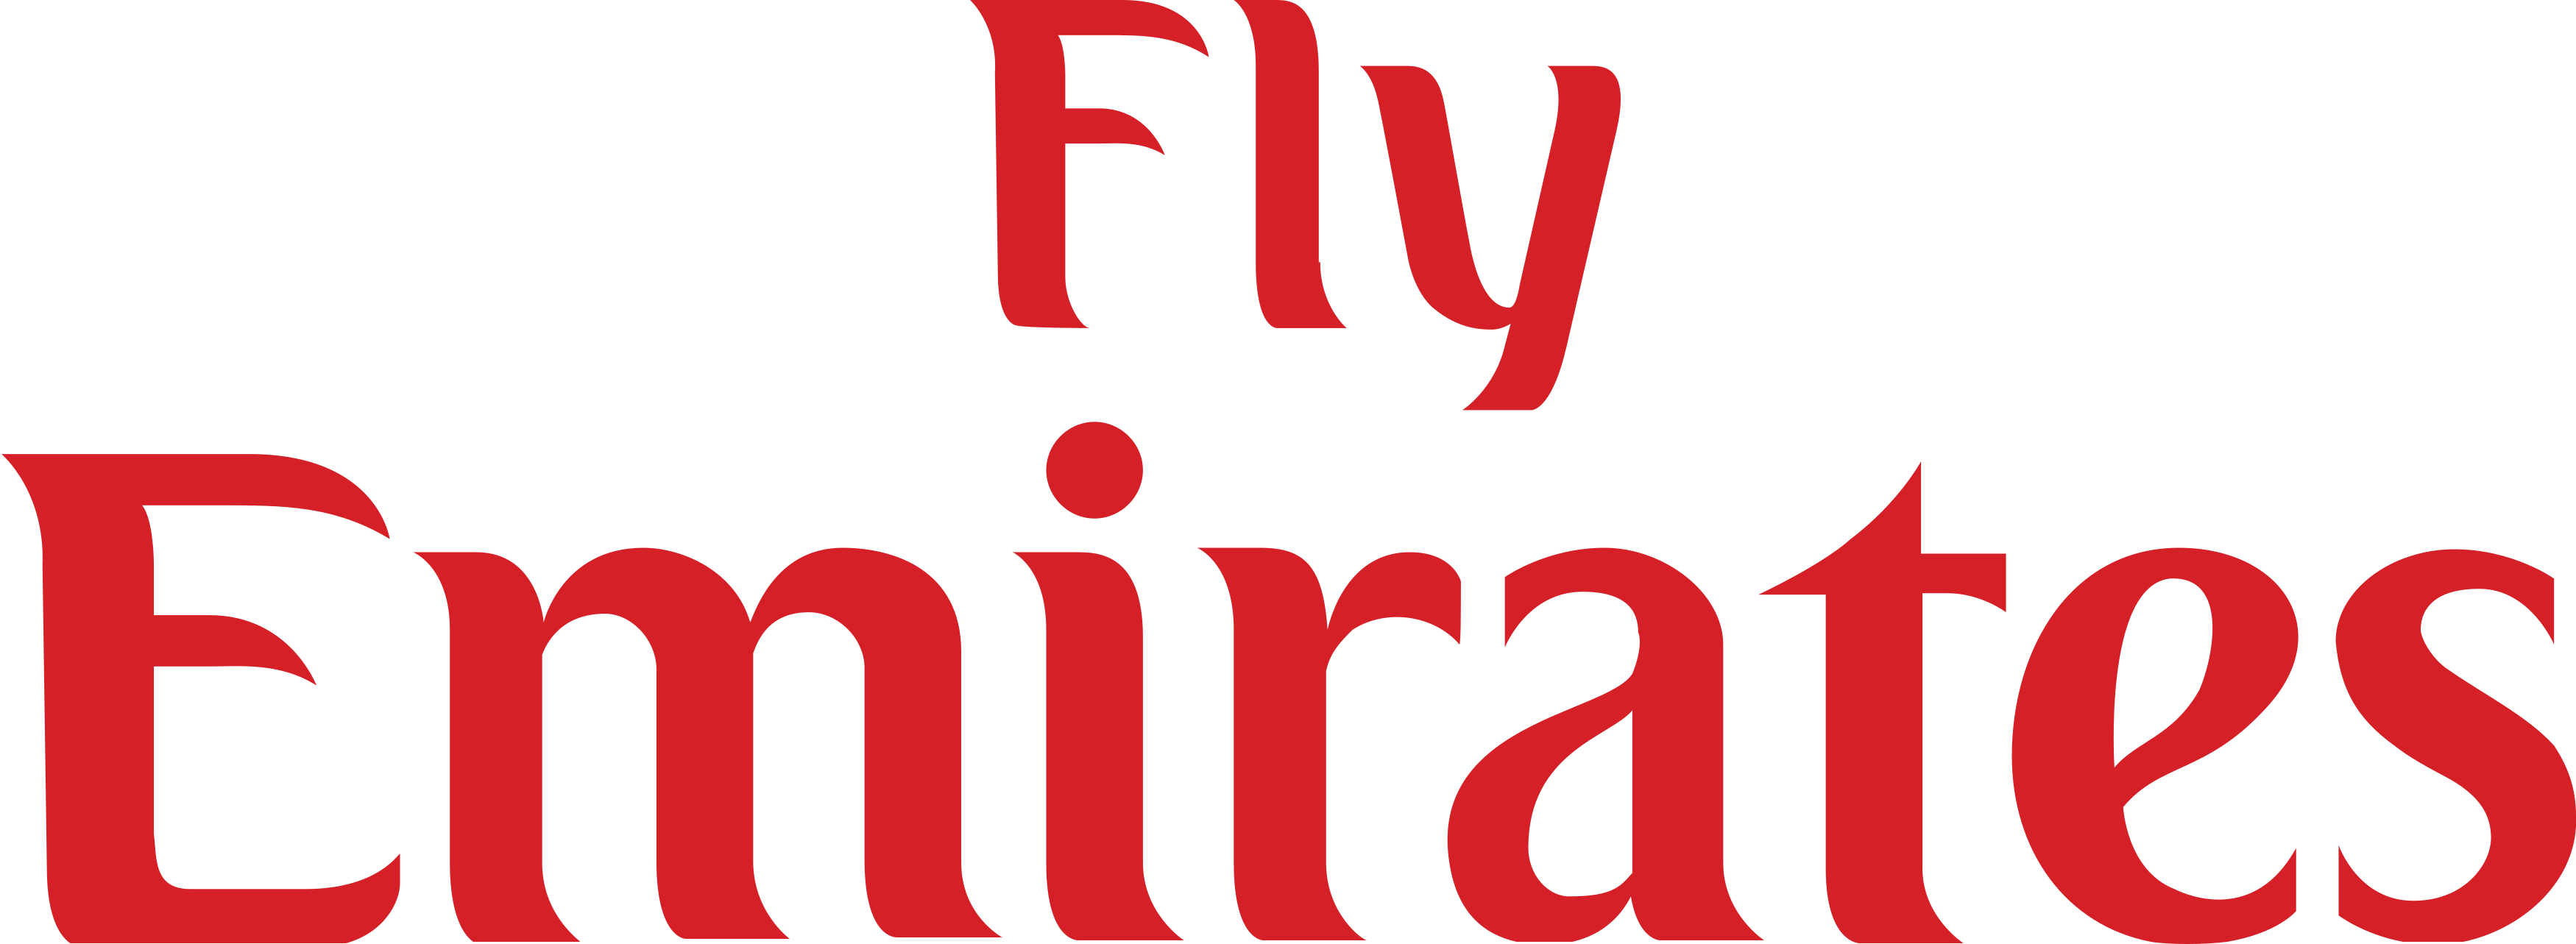 Emirates Logo - 20 สายการบินที่ดีที่สุดในโลก 2016 | สายการบินของไทยติด